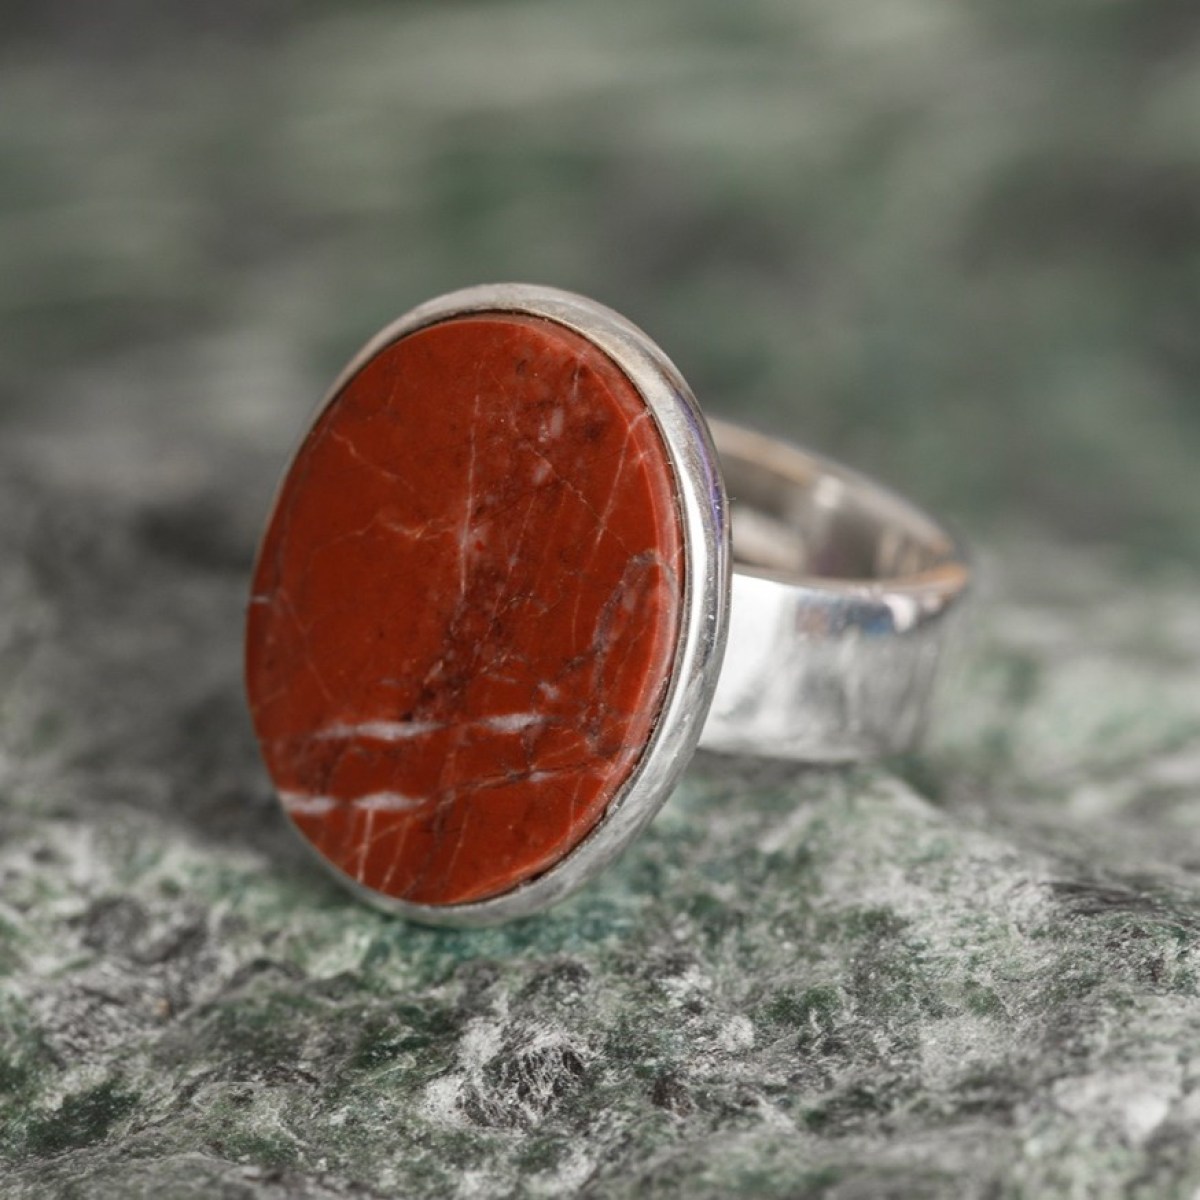 marmo-sassalbo-marmor-anello-ring